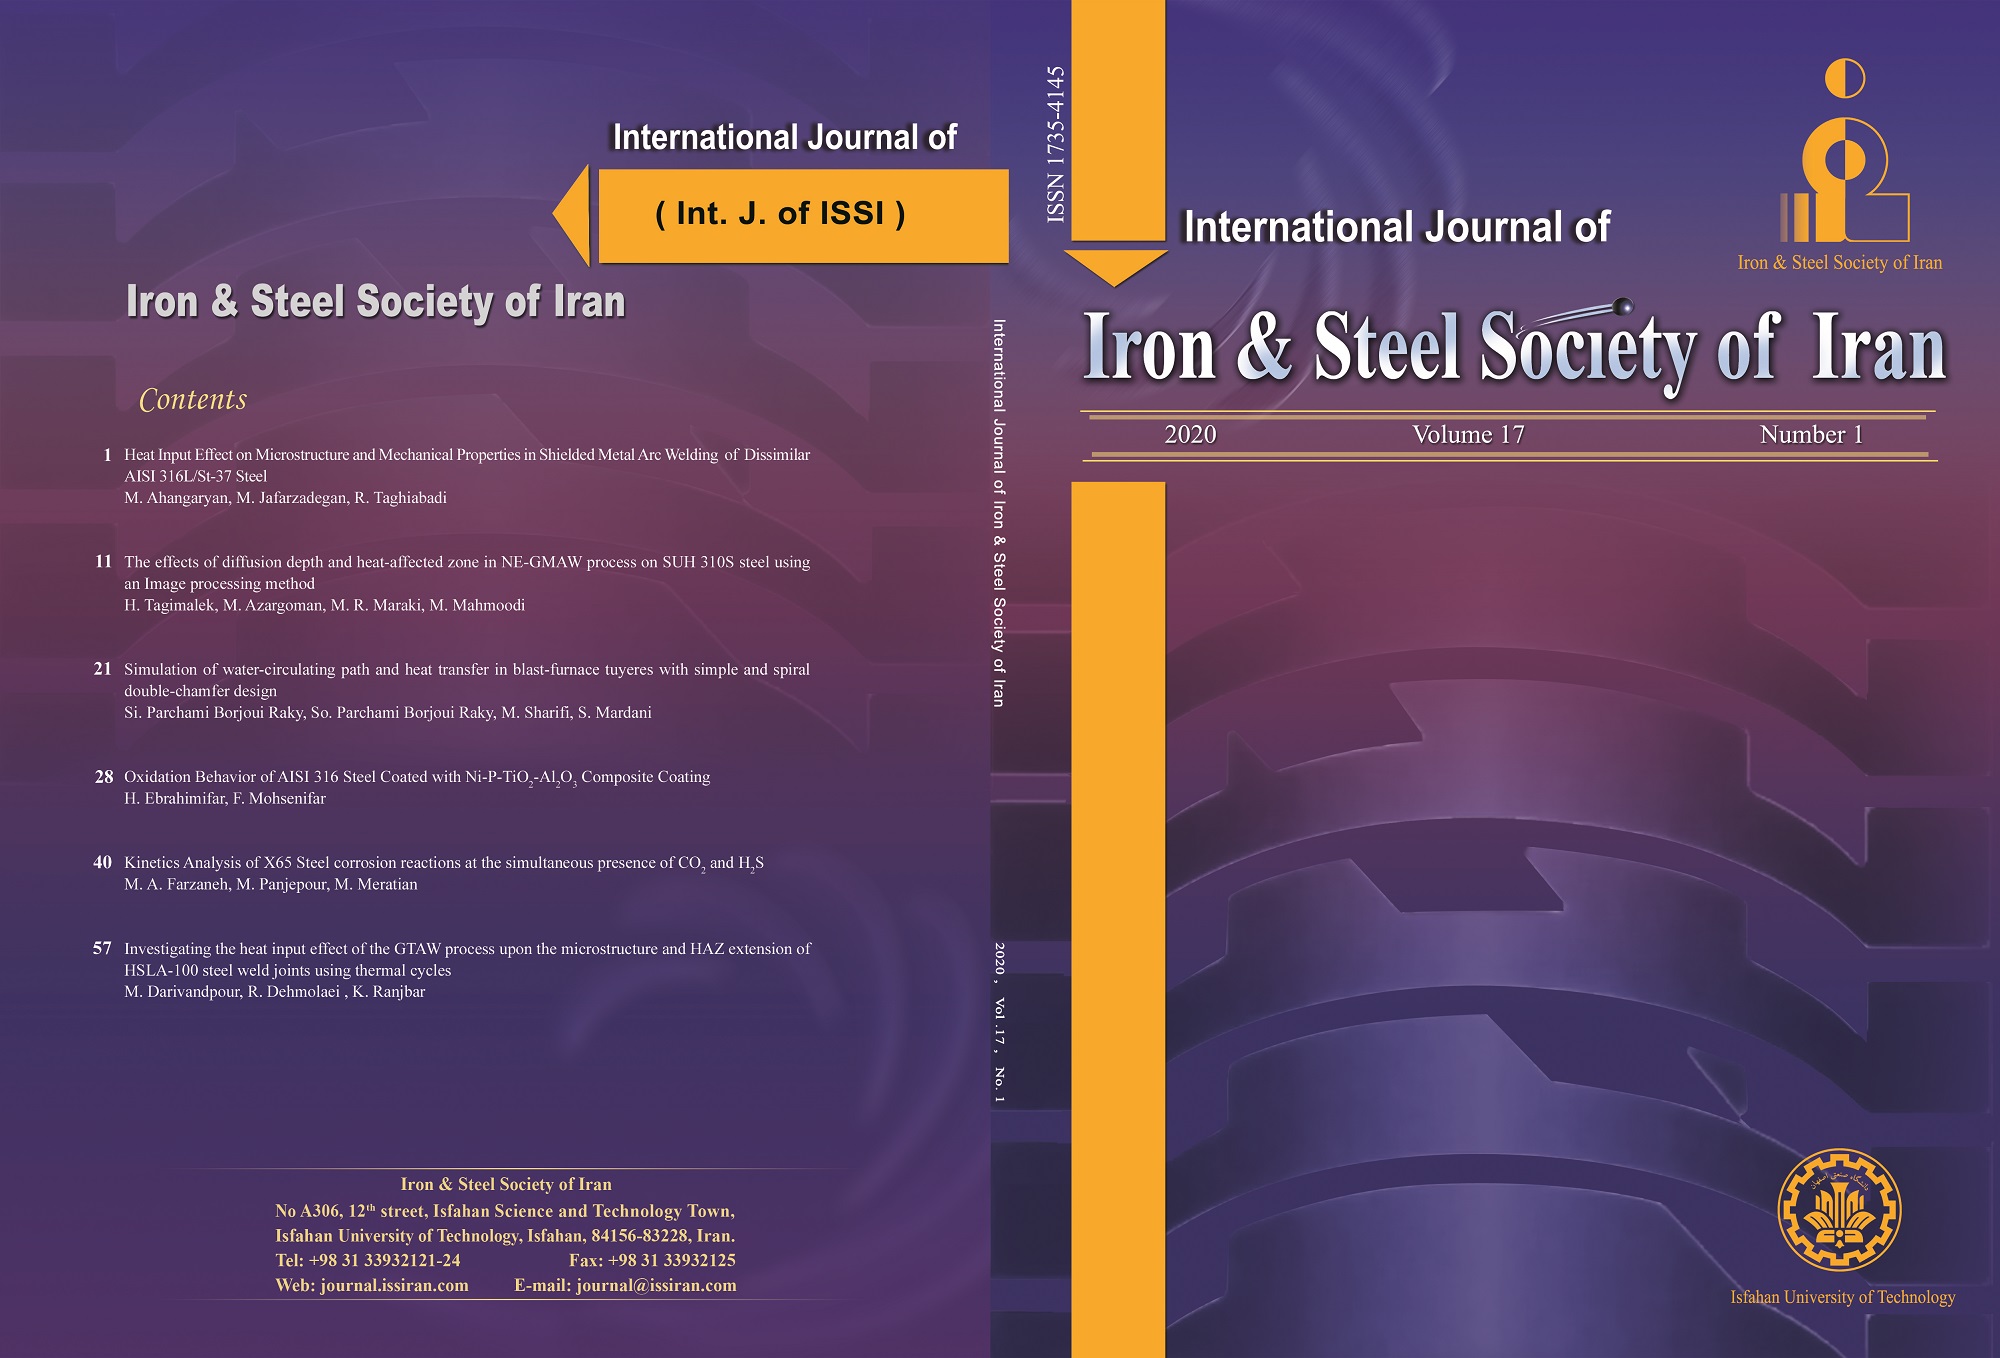 International Journal of Iron & Steel Society of Iran